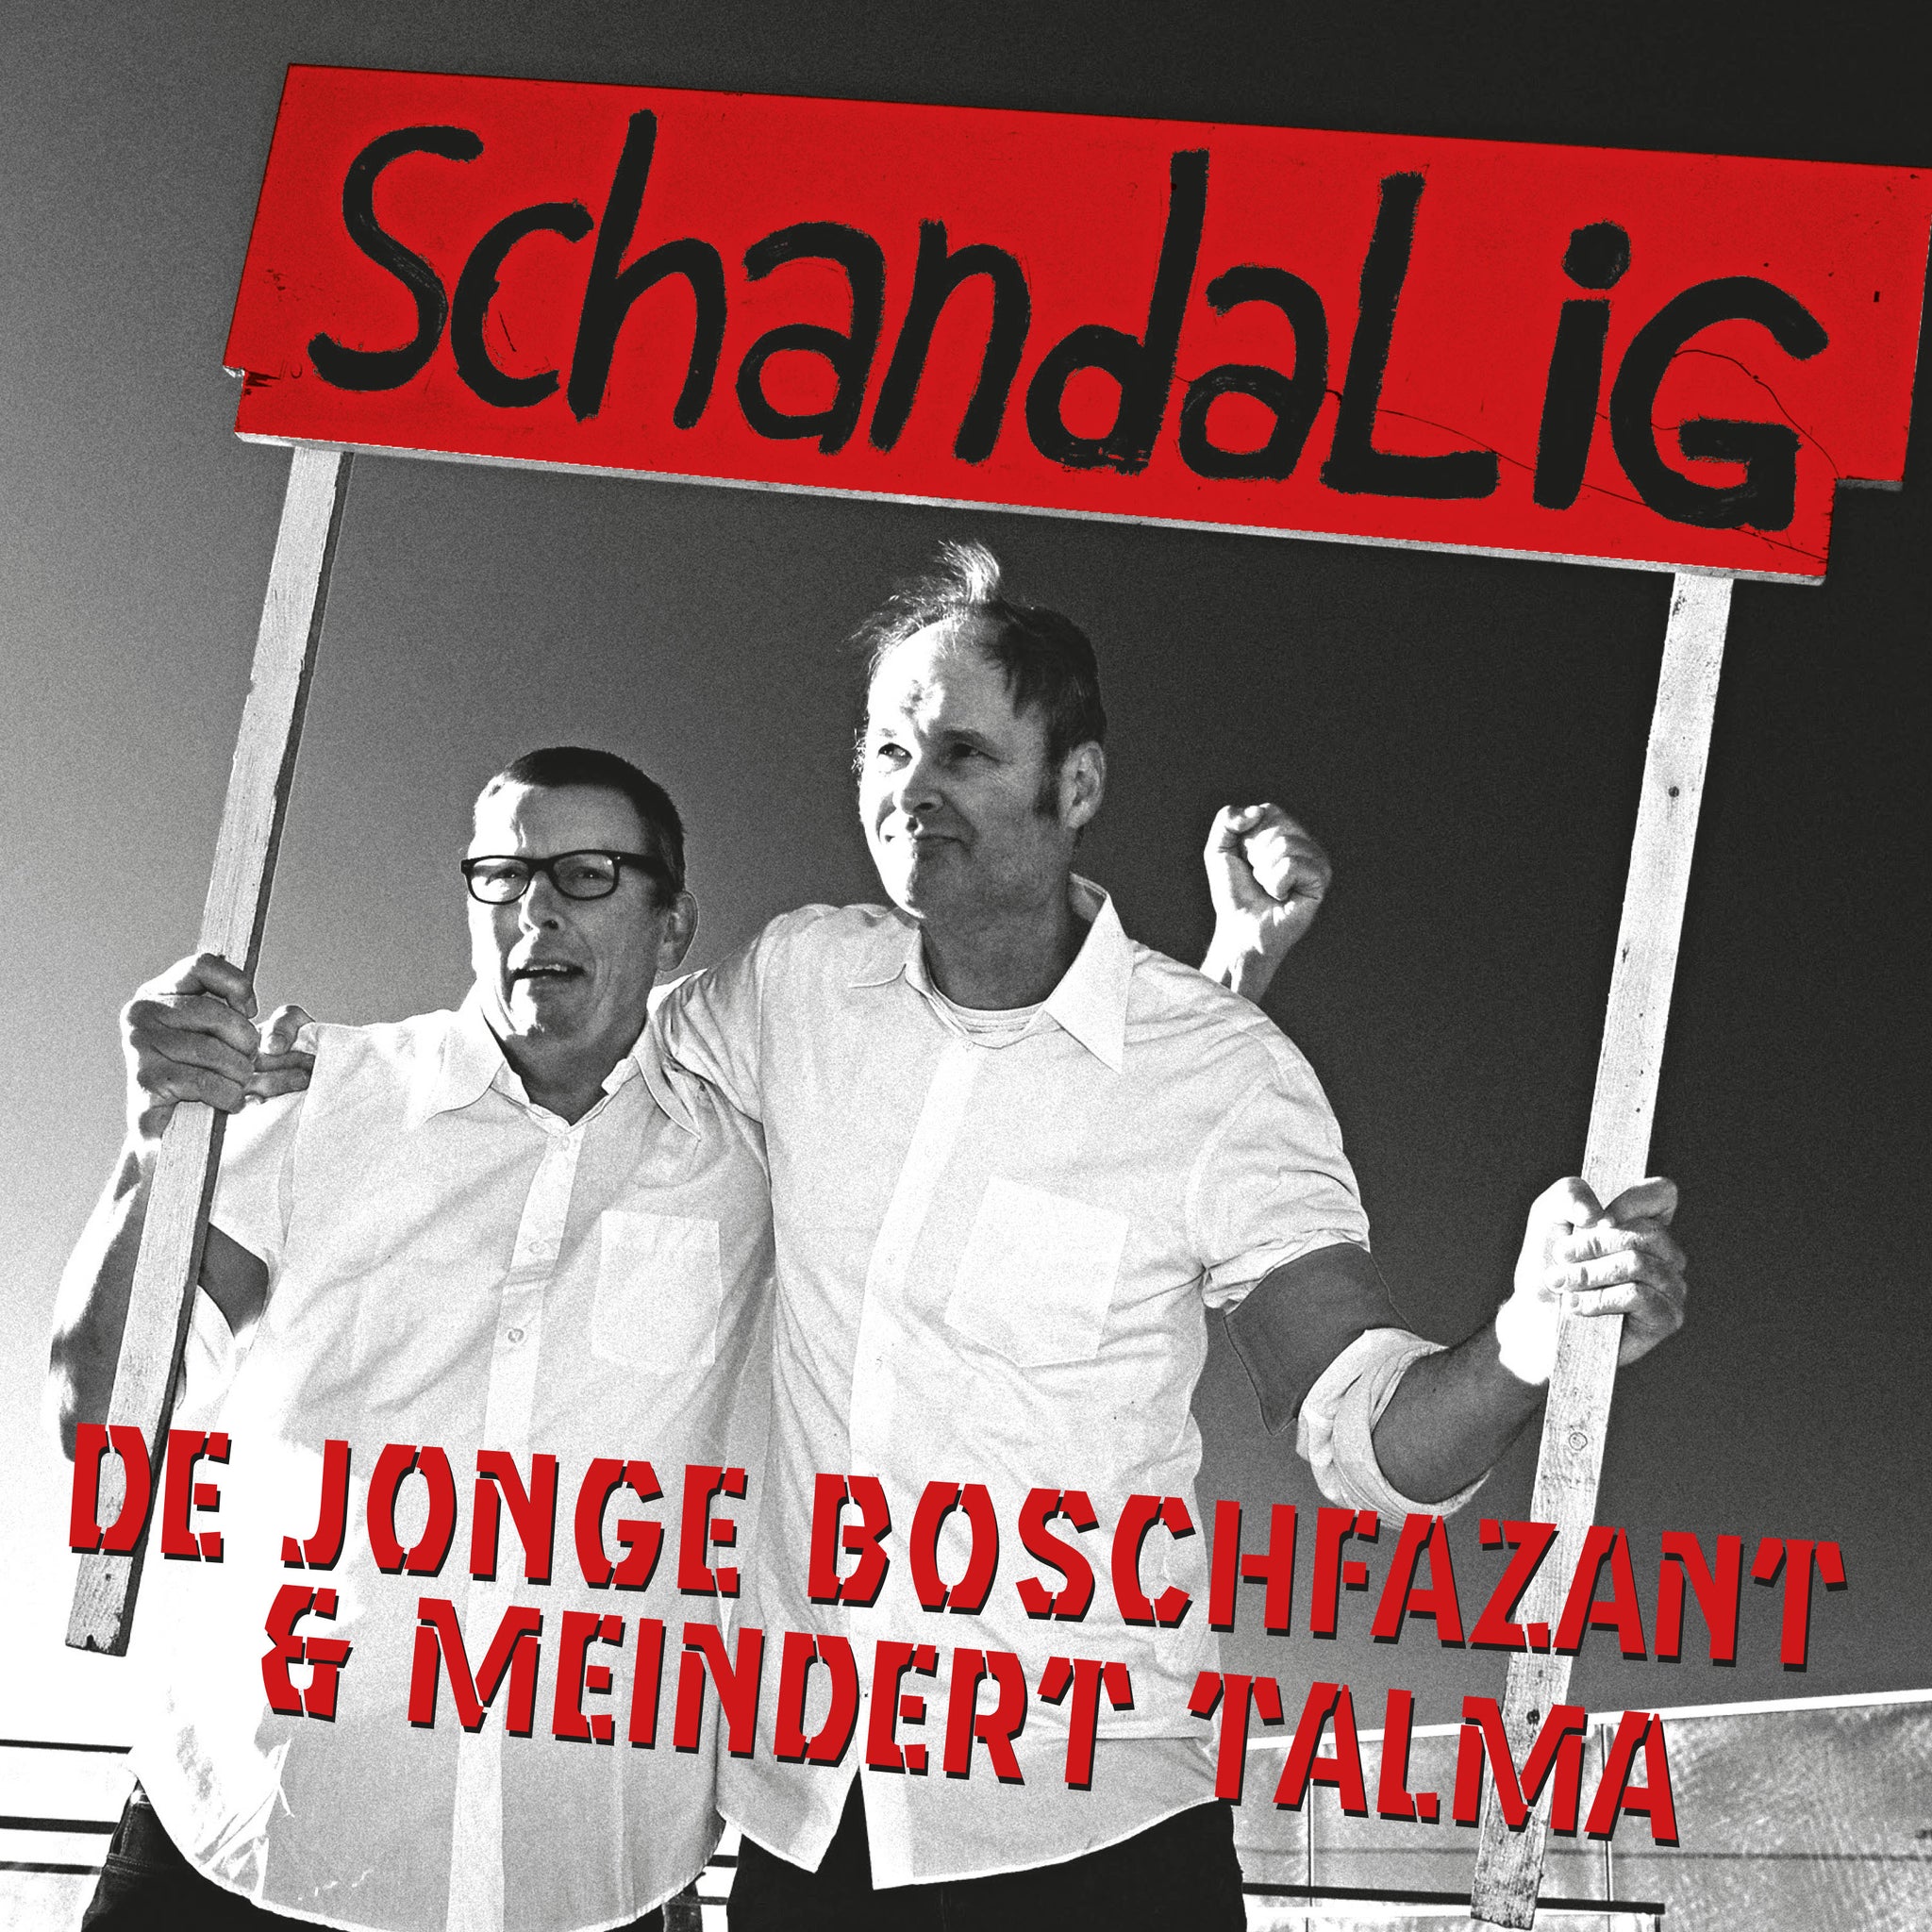 De Jonge Boschfazant & Meindert Talma - Schandalig